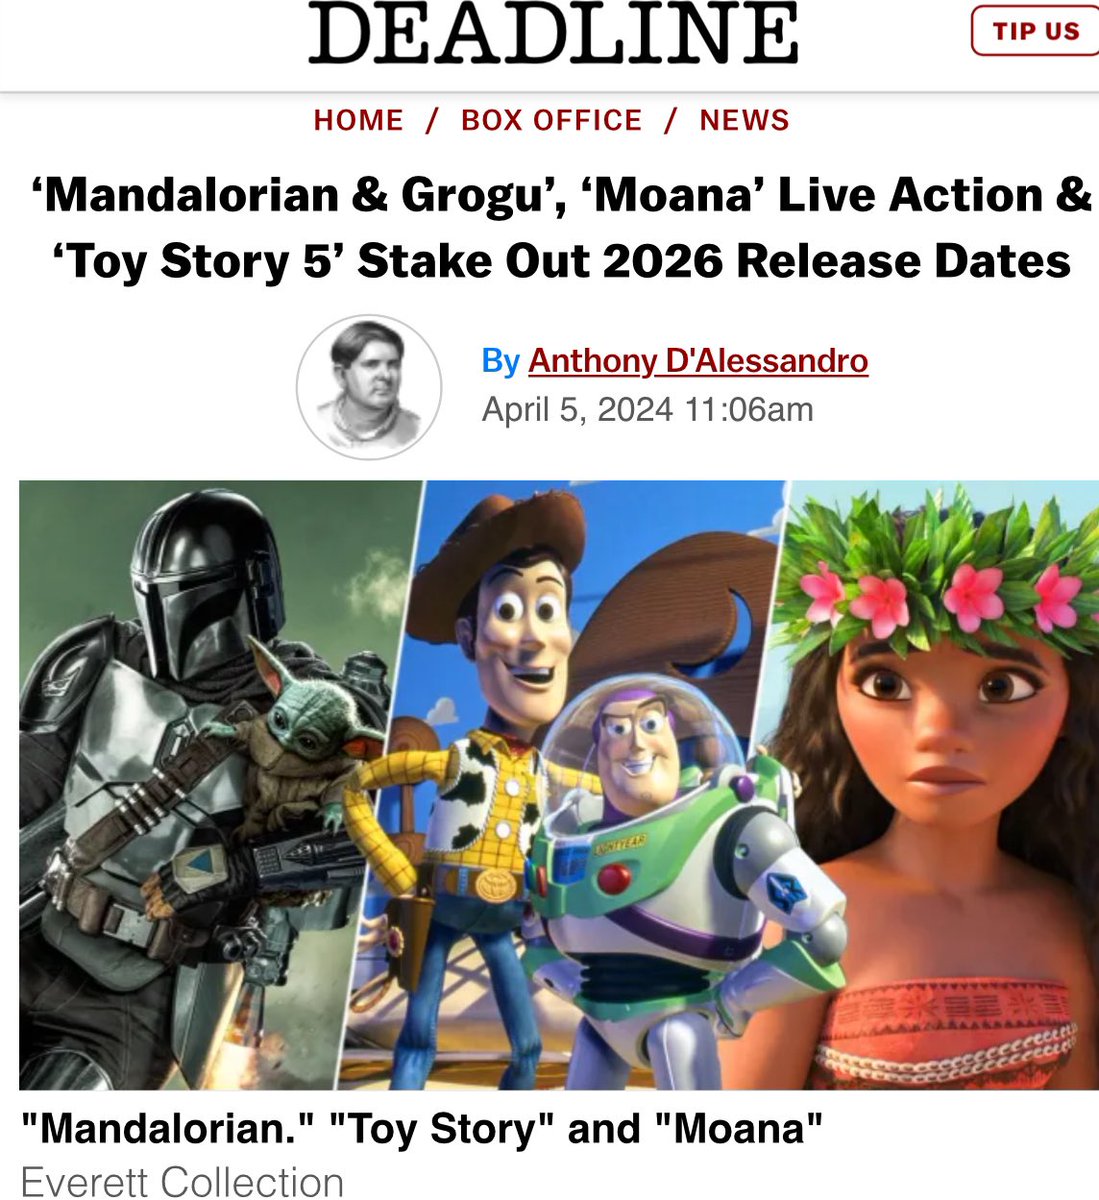 ‘Mandalorian & Grogu’, ‘Moana’ Live Action & ‘Toy Story 5’ Stake Out 2026 Release Dates
2026 Summer Box Office is Disney Fever!
#mandalorian #themandalorian #jonfavreau #starwars #lucasfilm #moana #moanadisney #disneymoana #toystory #toystoryfan #toystorylover #pixar #pixarfan